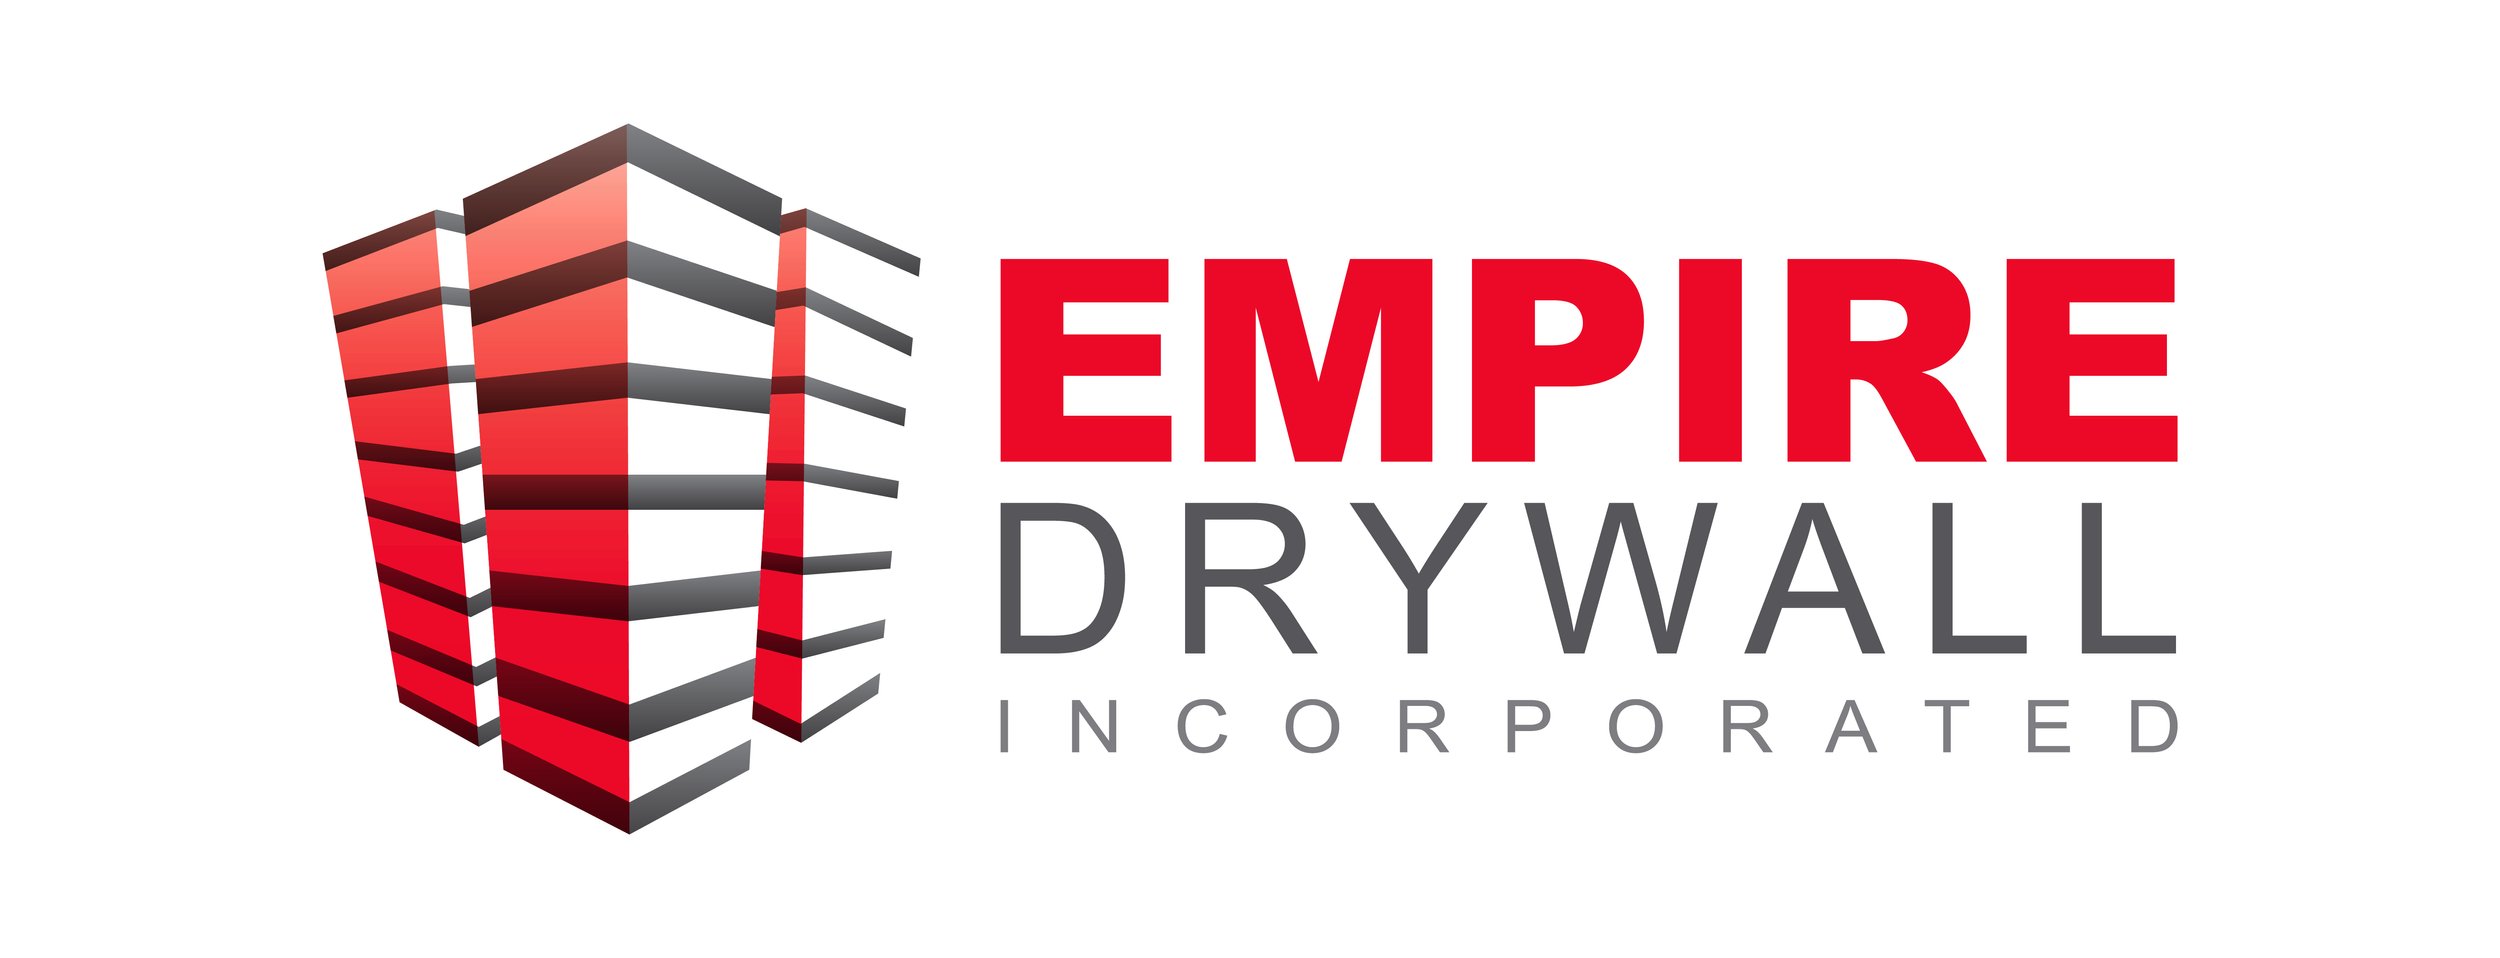 Empire Drywall Inc.jpg